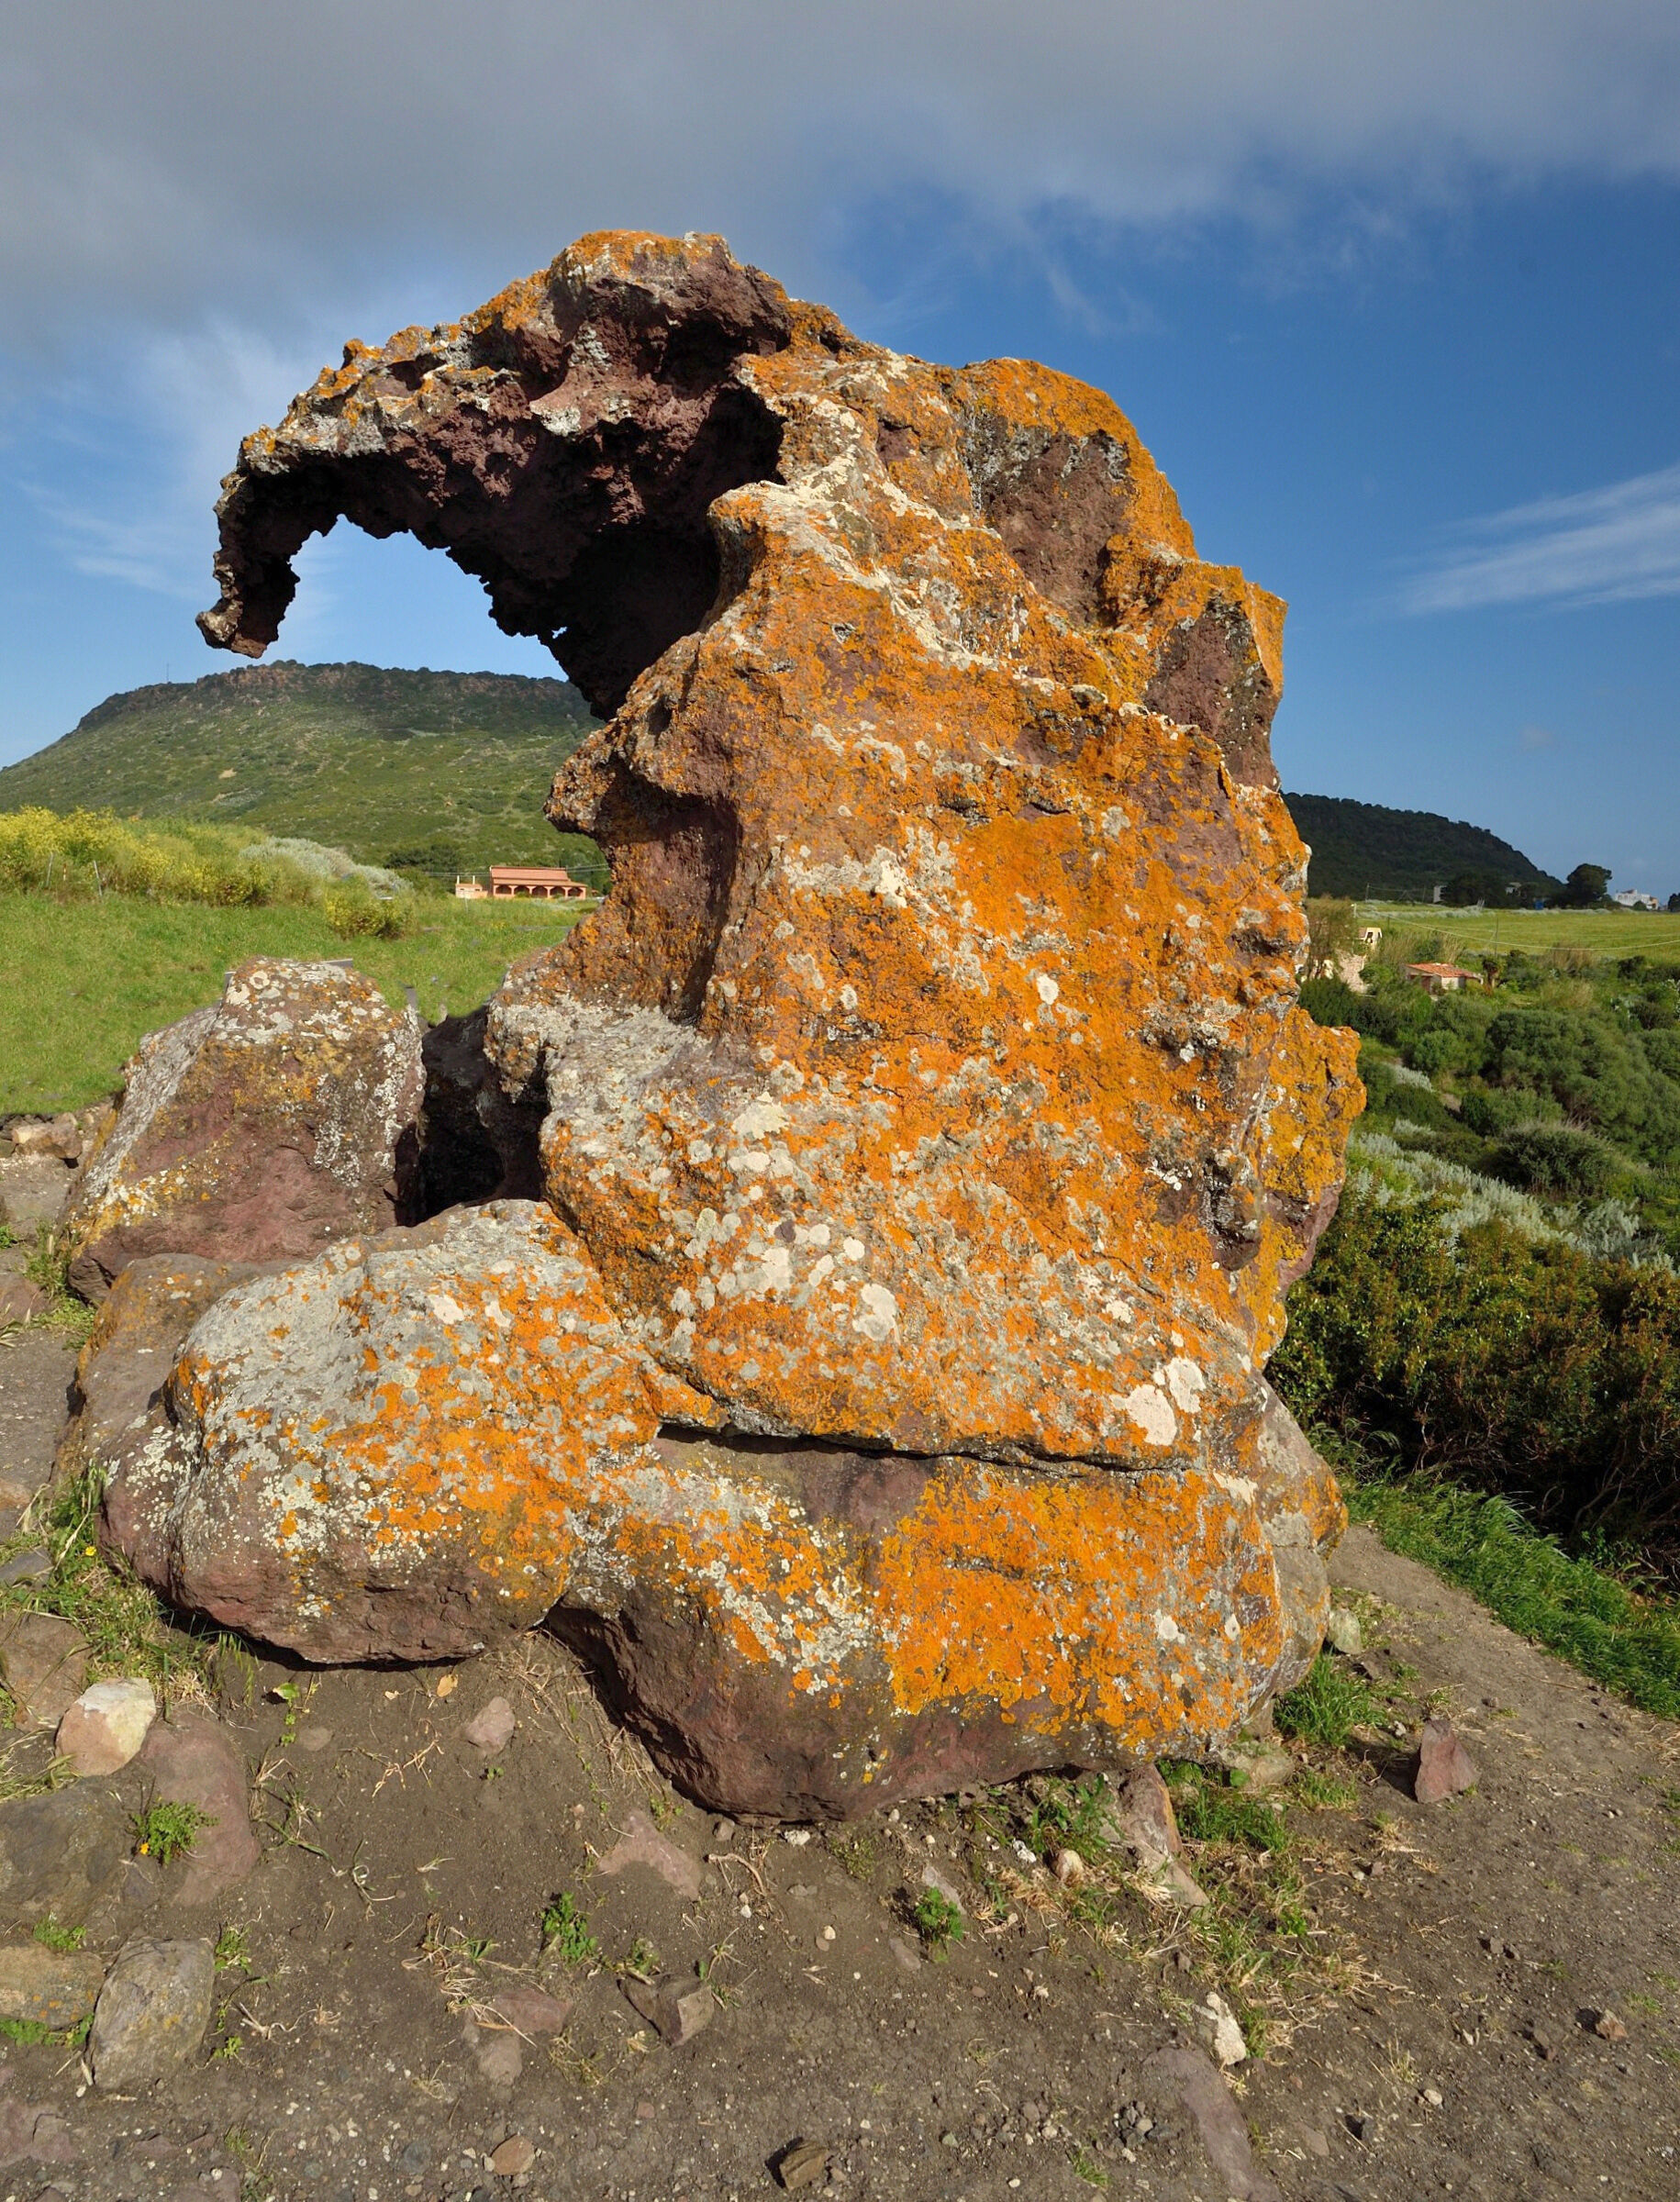 The rock of the Castelsardo Elephant...